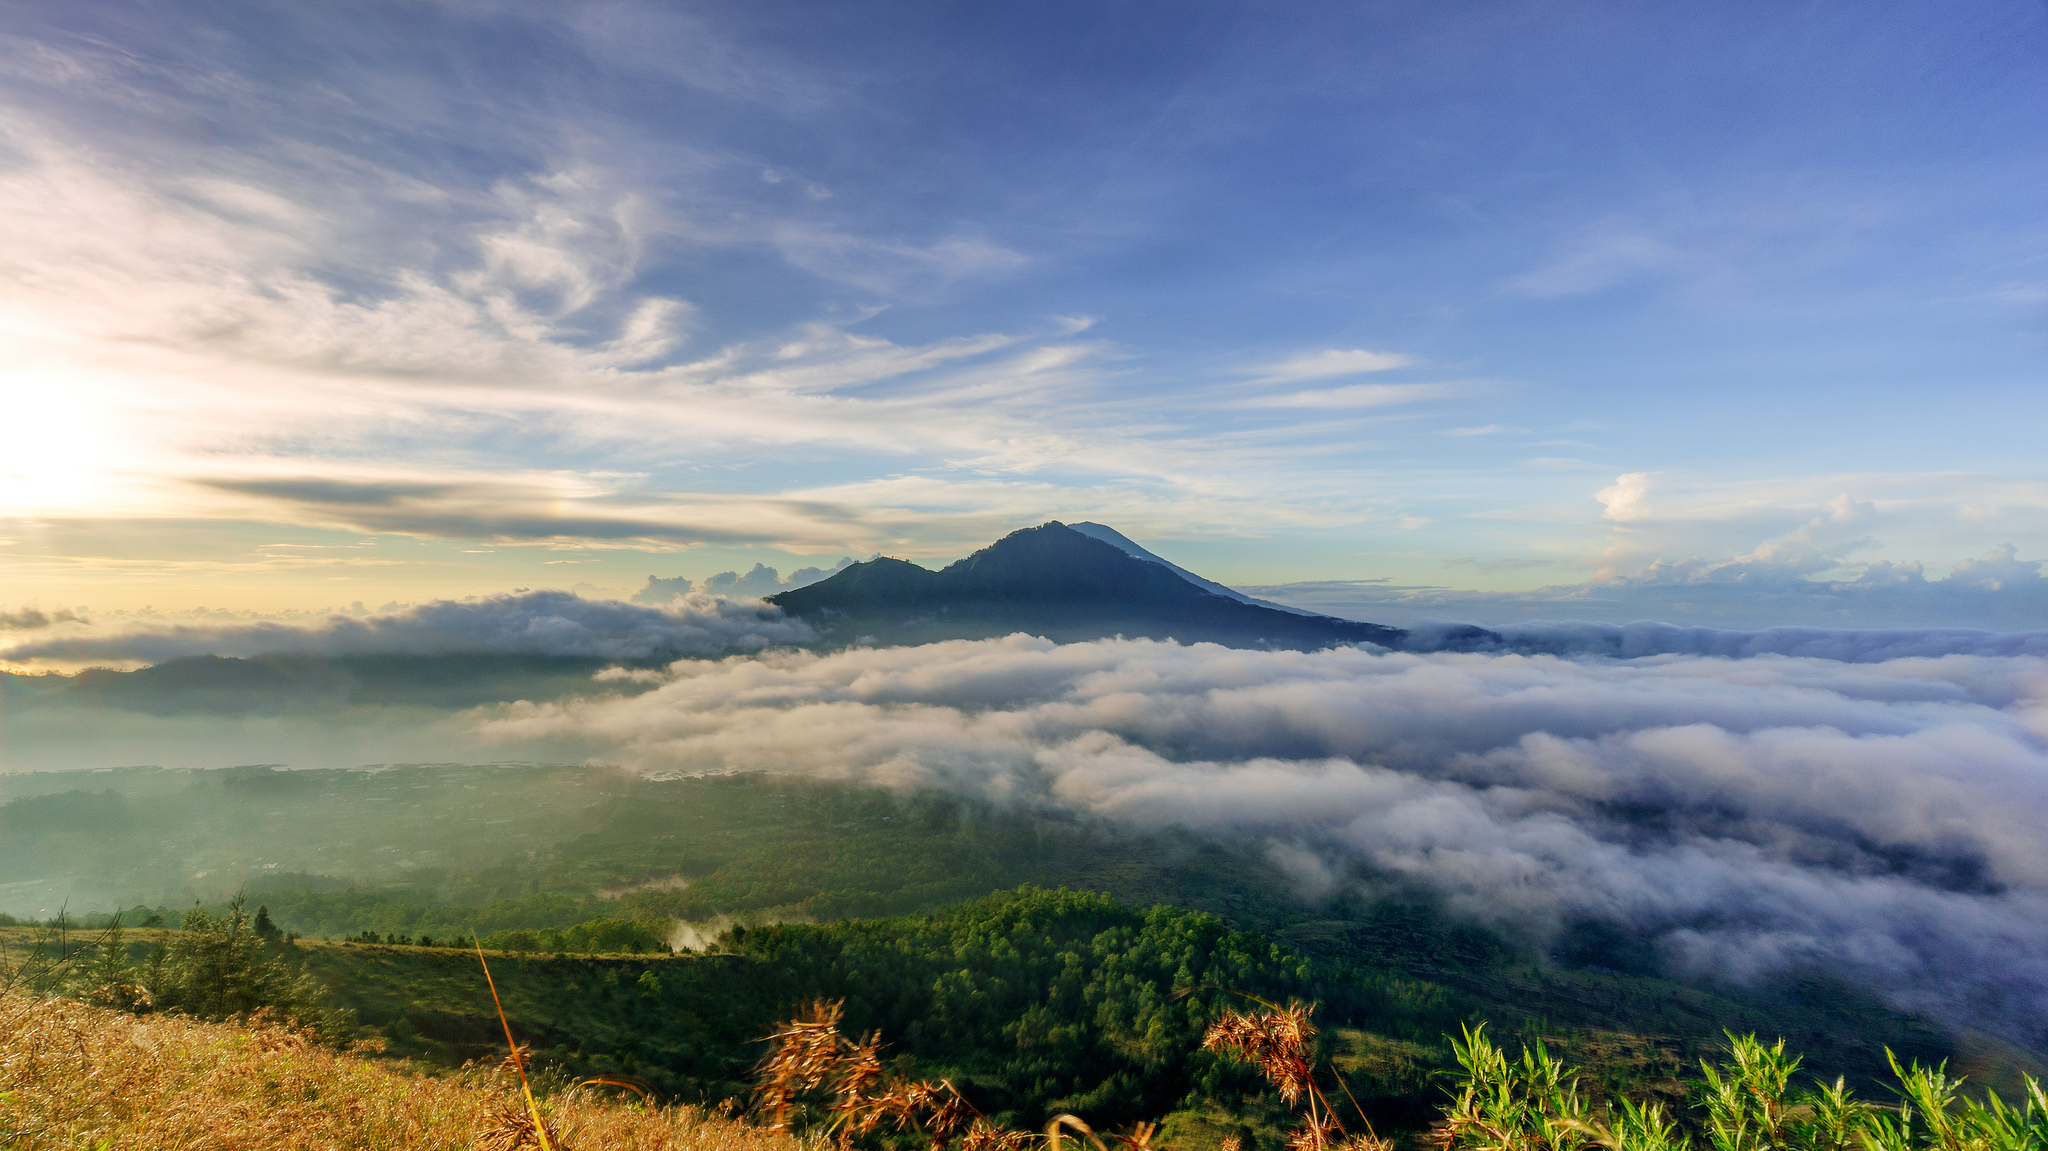 Mount Batur Bali - Bali Explore - Insight To Asia Tours